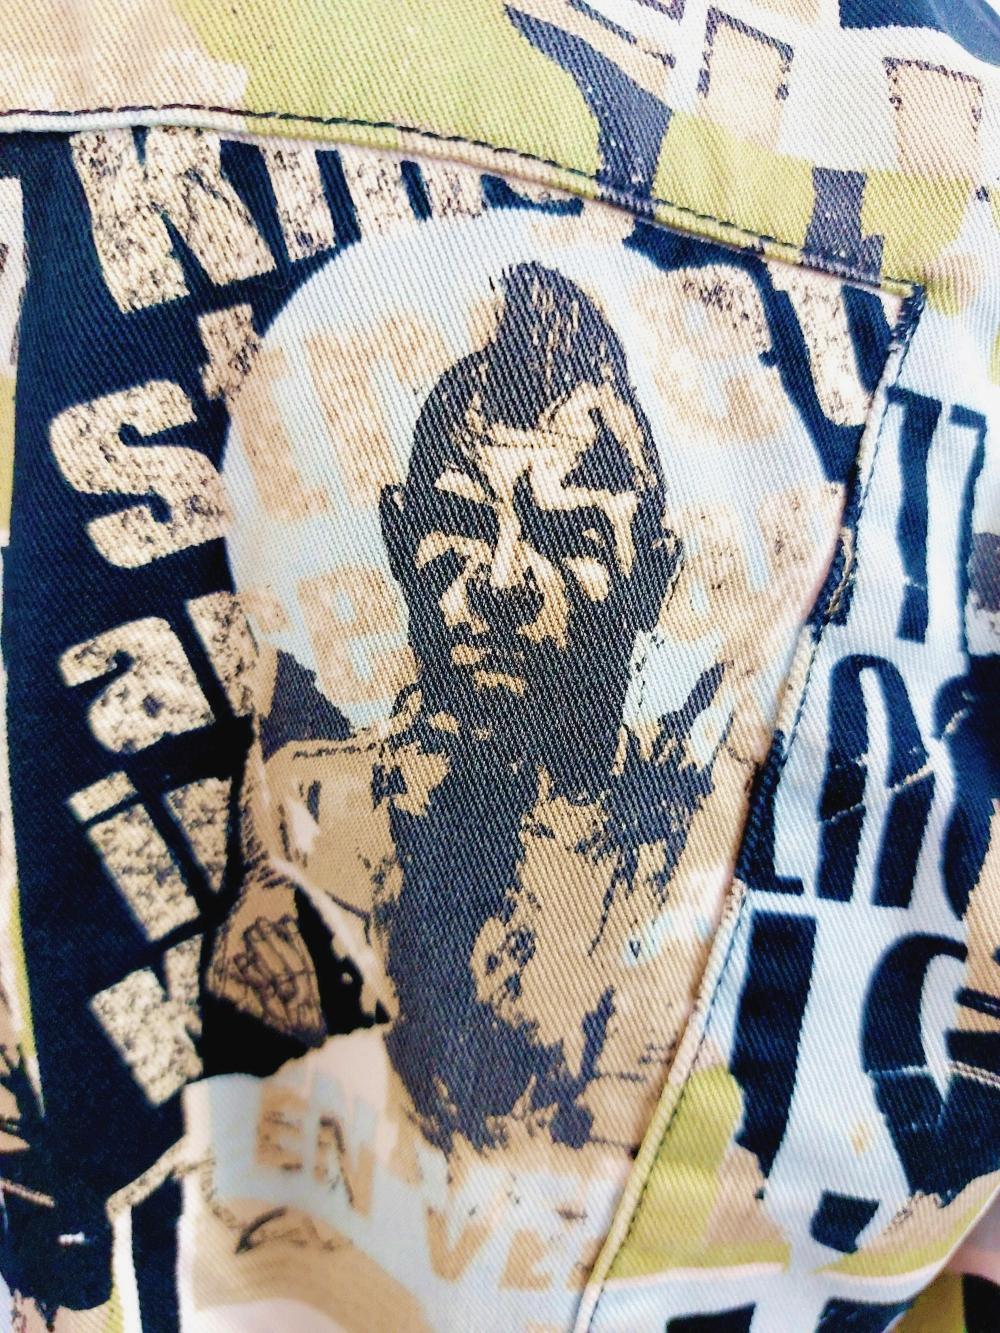 90s Gaultier Jeans Anarchy Punk Rock Fight Racism Tattoo Club Kid Denim Jacket For Sale 11